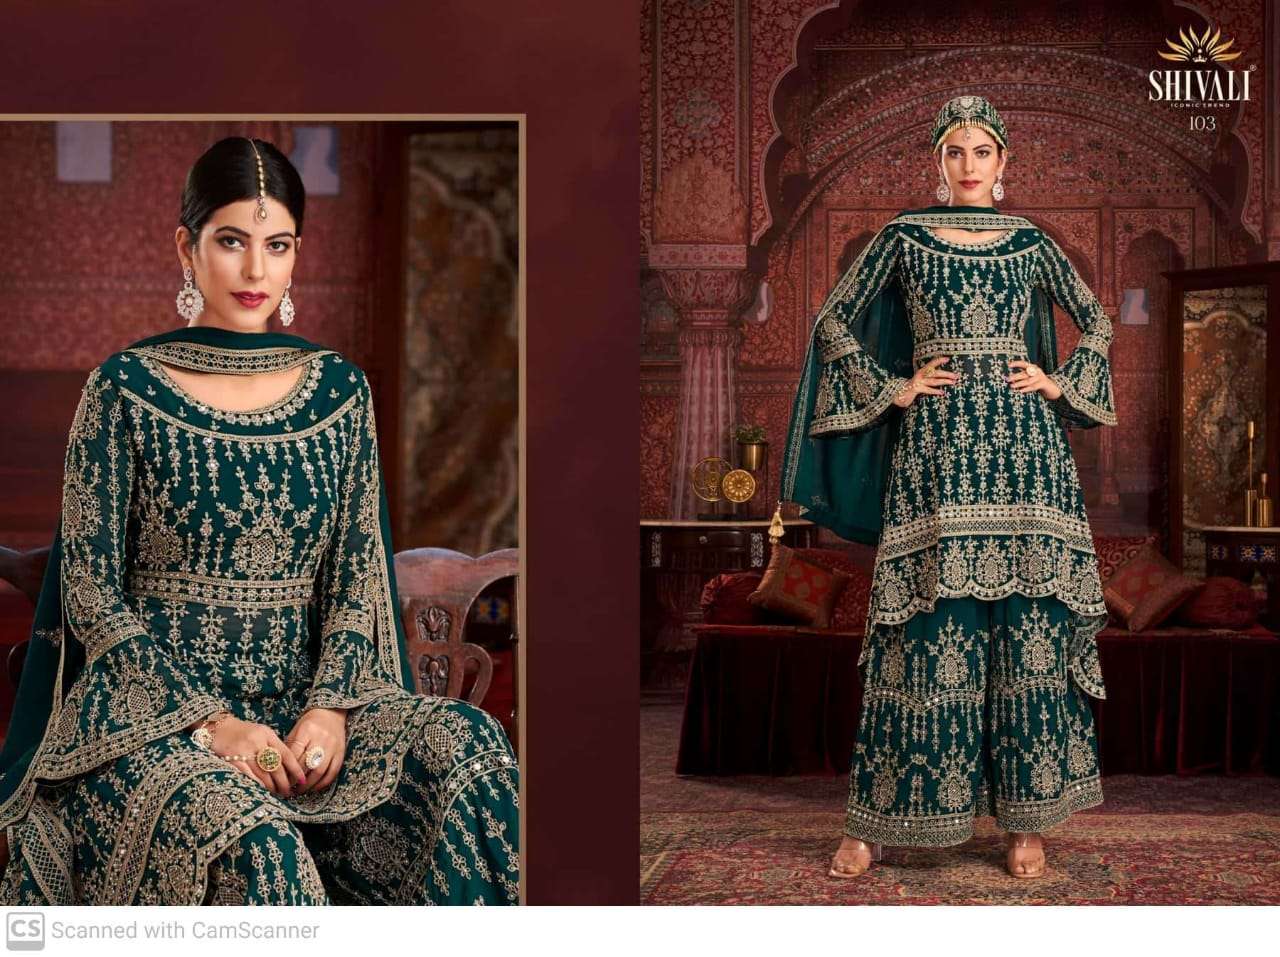 Buy Halima Sultan Dress Online In India - Etsy India